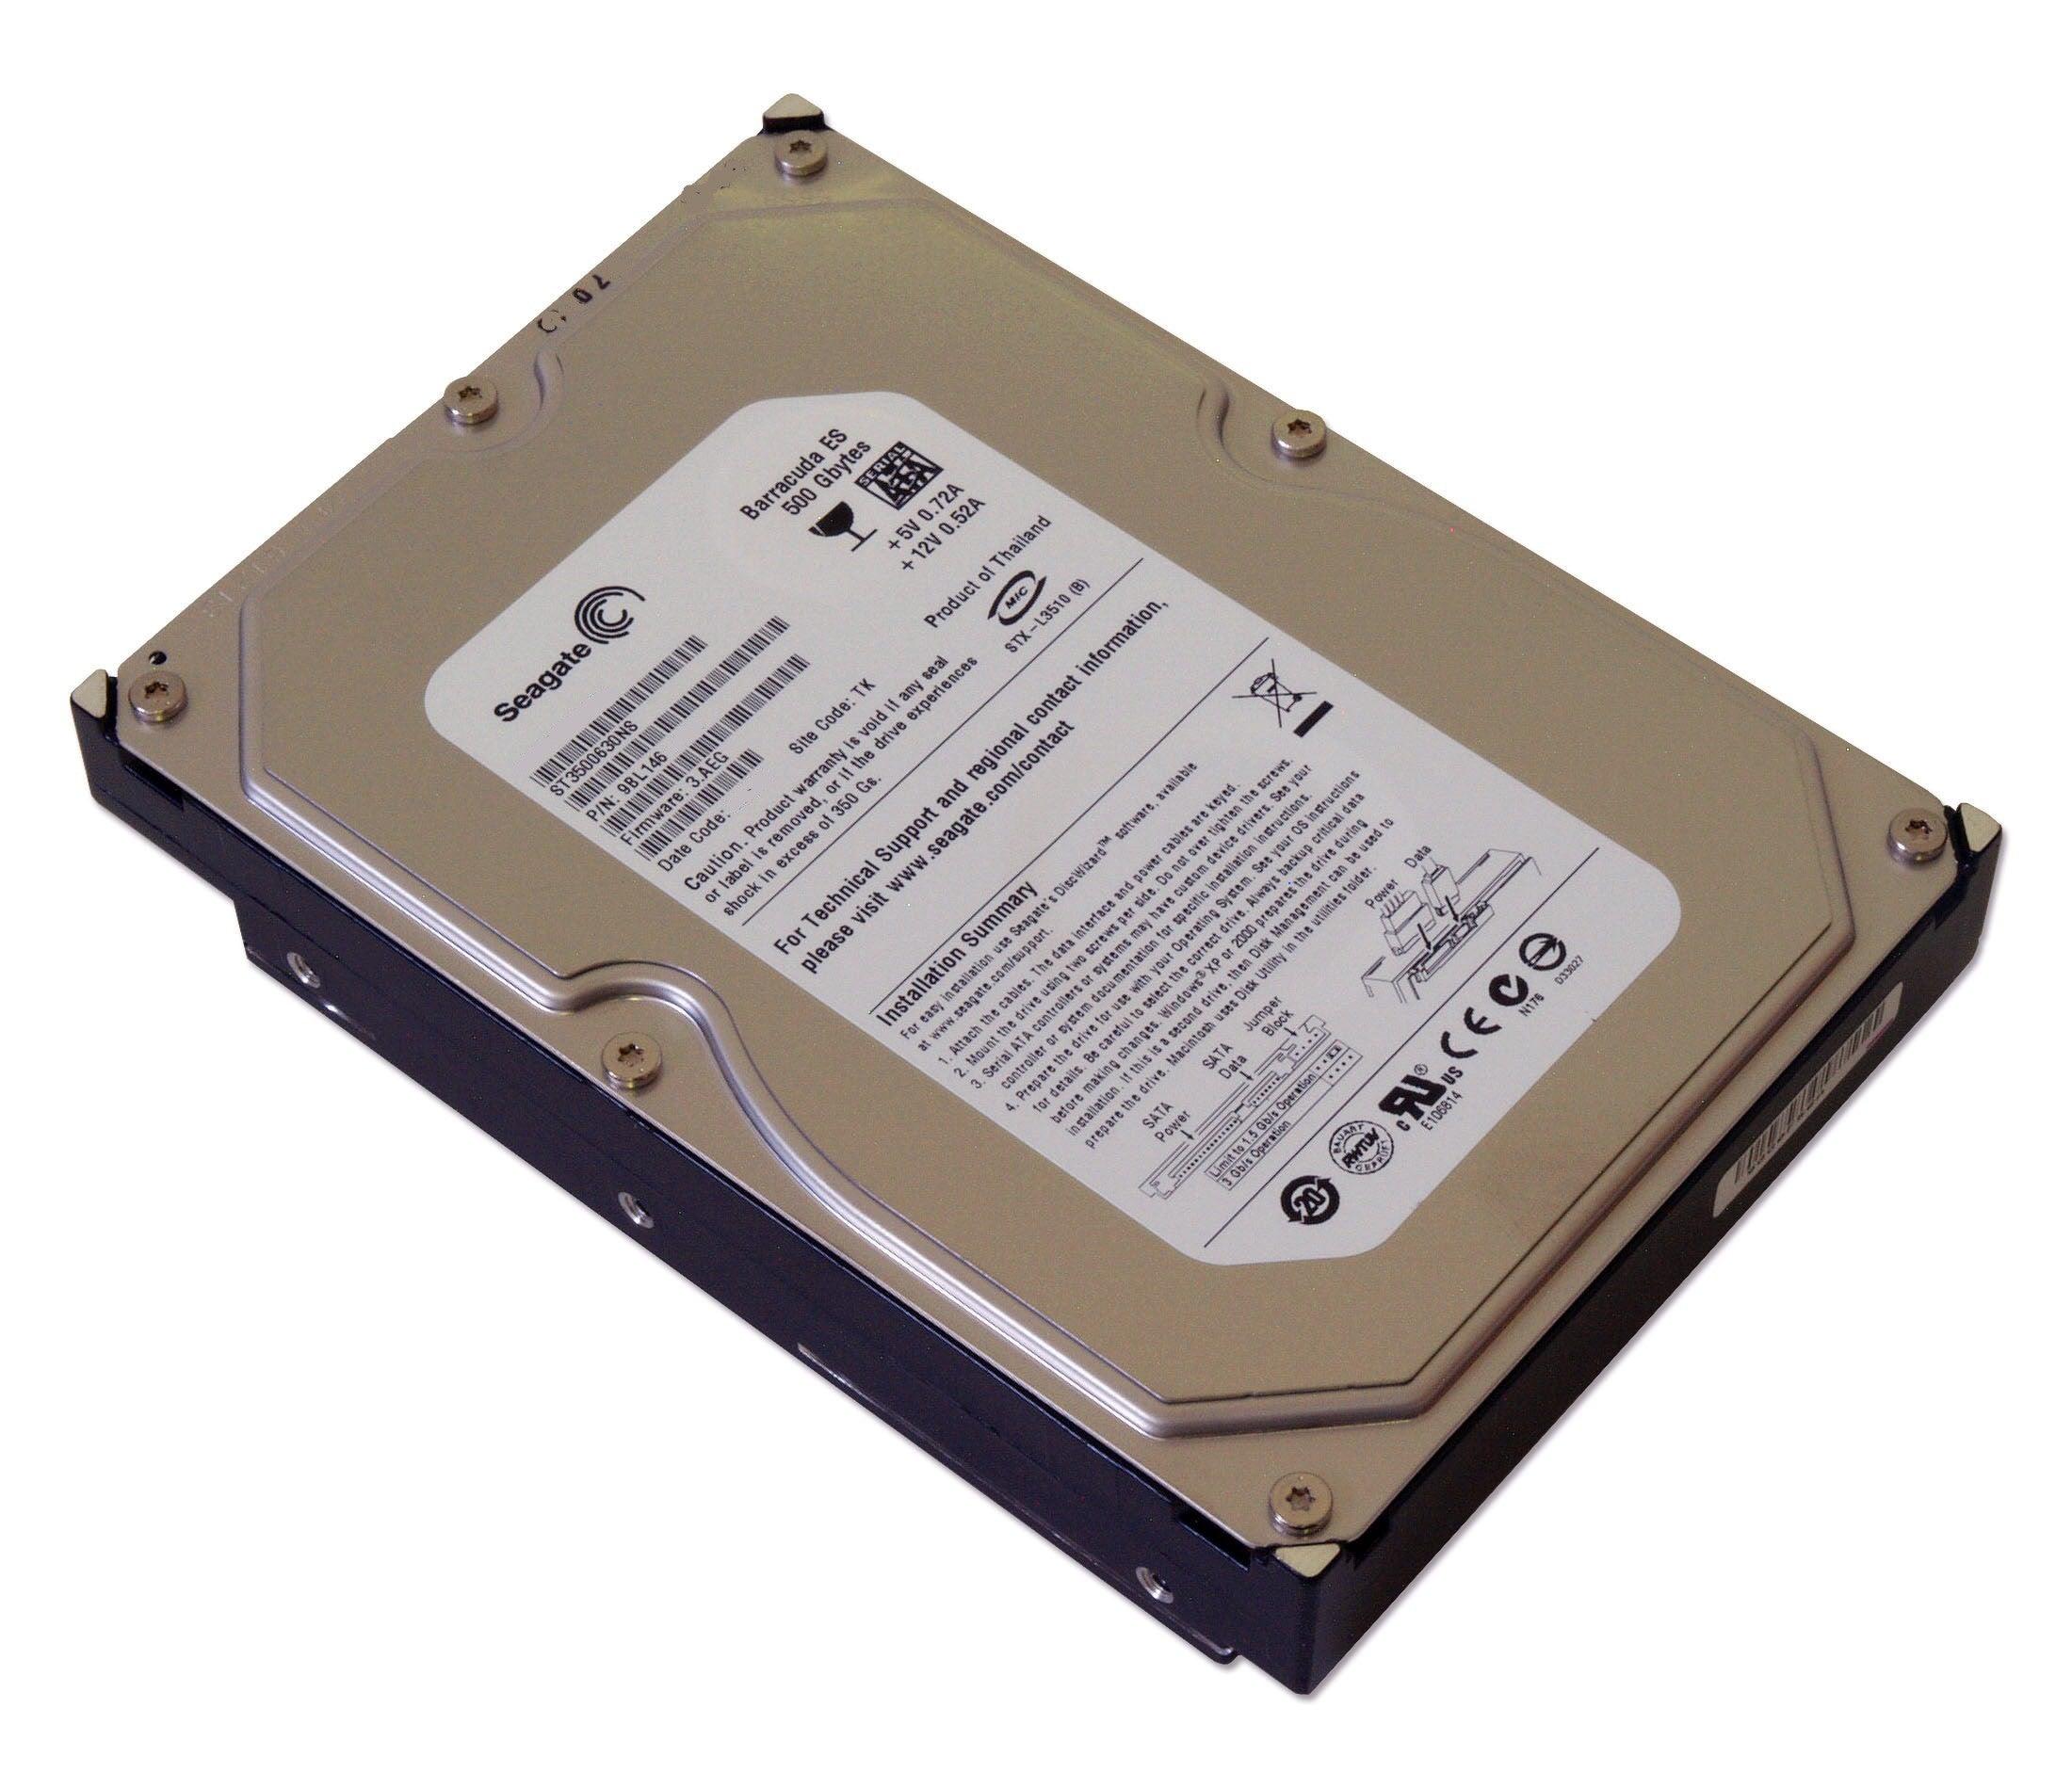 Seagate ST3500630NS 500GB 7200RPM 3.5" SATA Desktop Drive